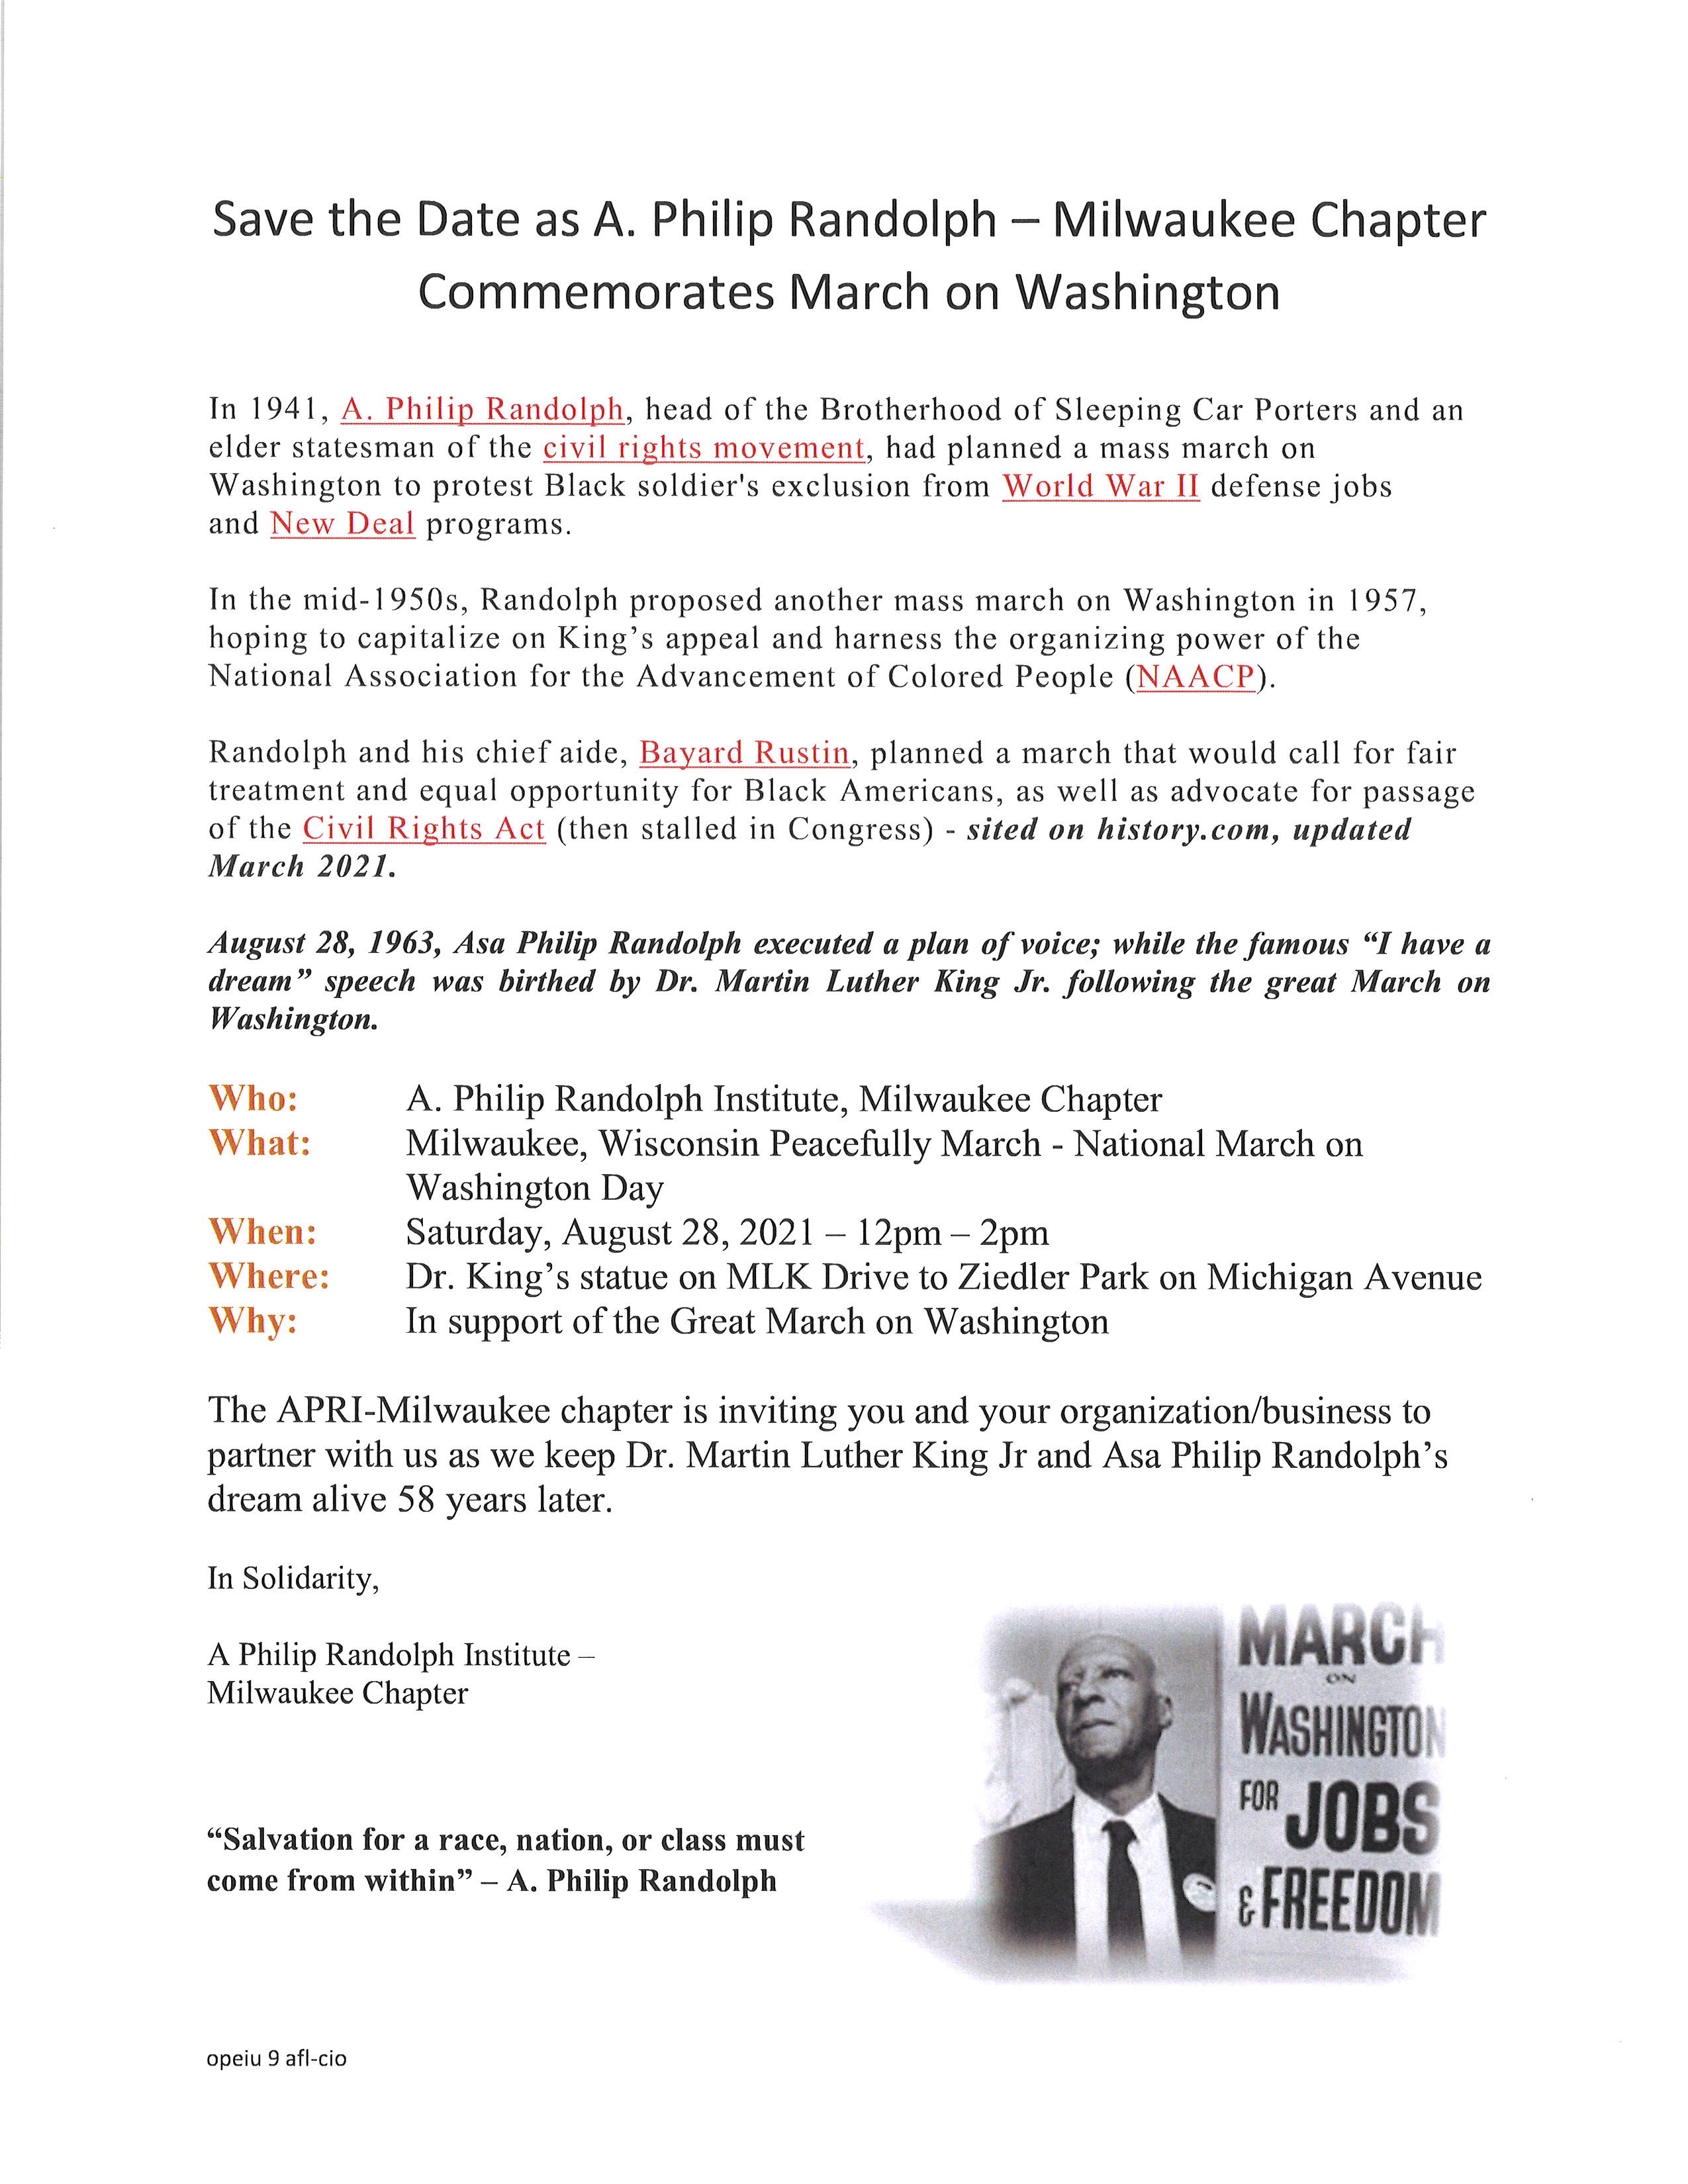 APRI Commemorates March on Washington